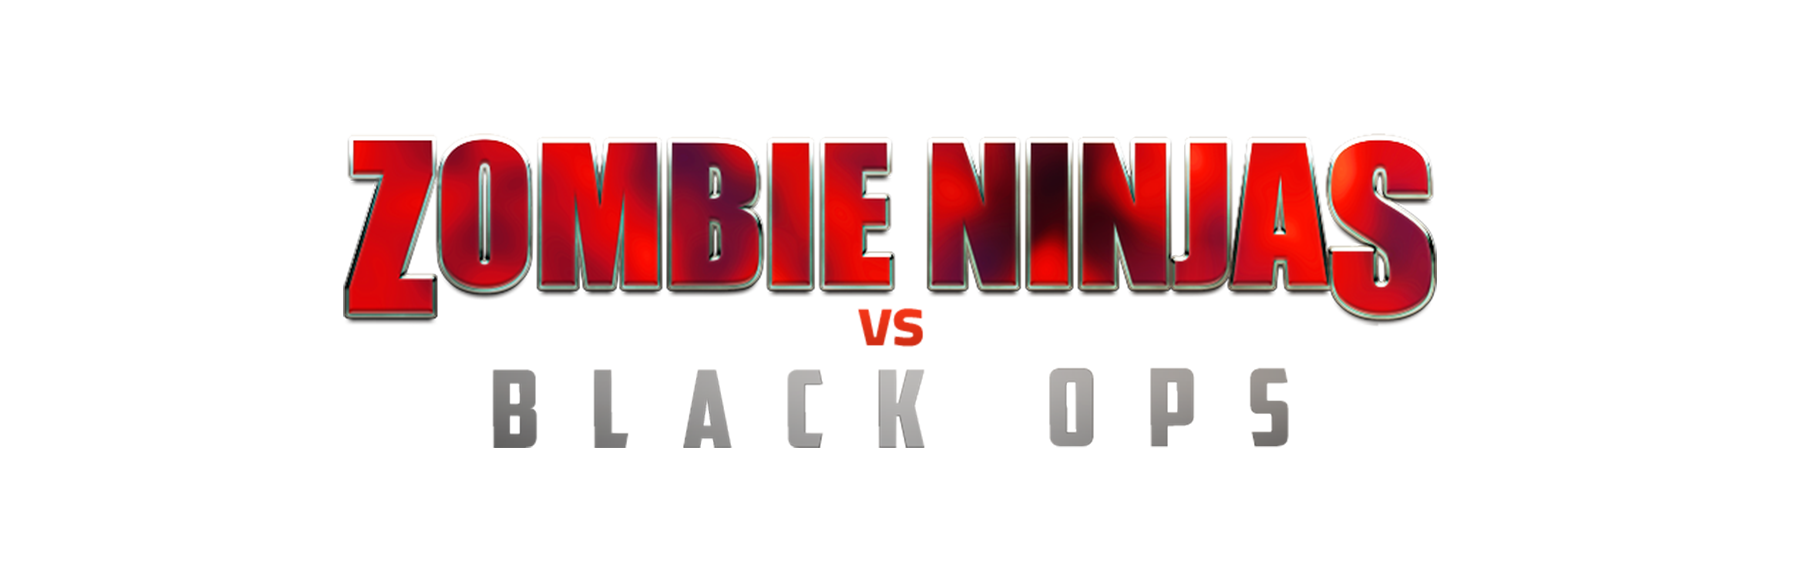 Amazing Zombie Ninjas Vs Black Ops Pictures & Backgrounds